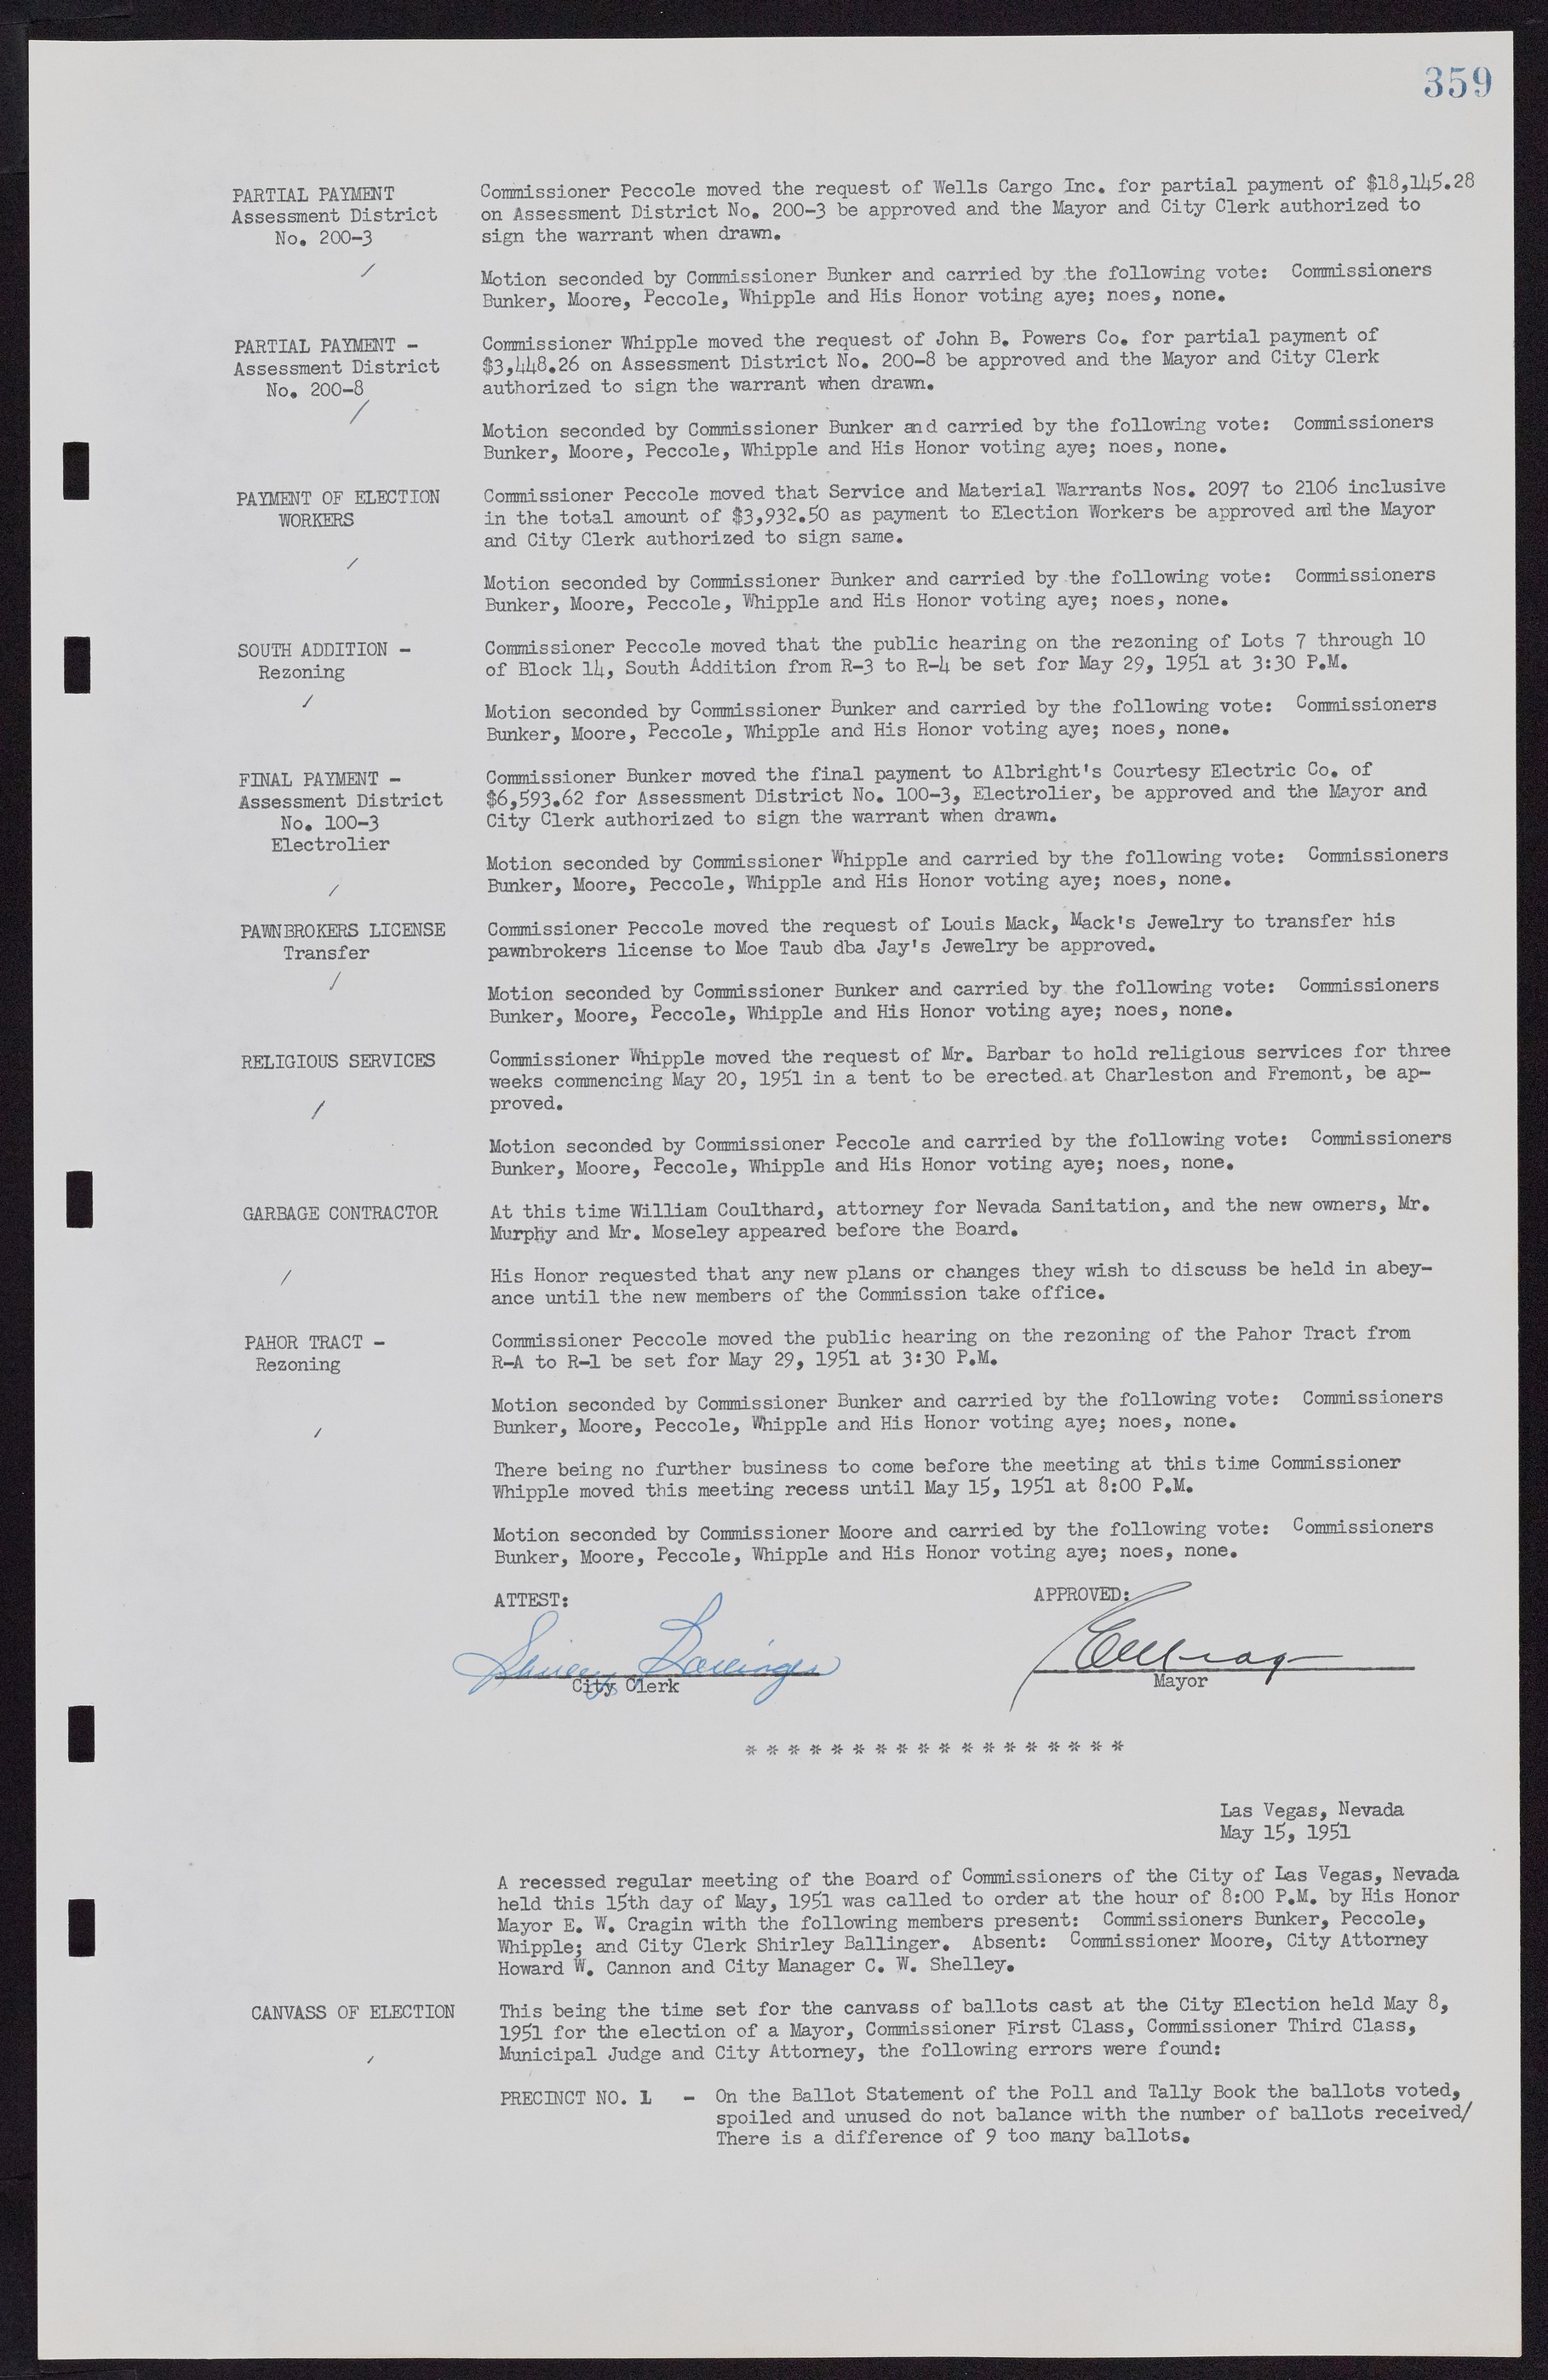 Las Vegas City Commission Minutes, November 7, 1949 to May 21, 1952, lvc000007-371